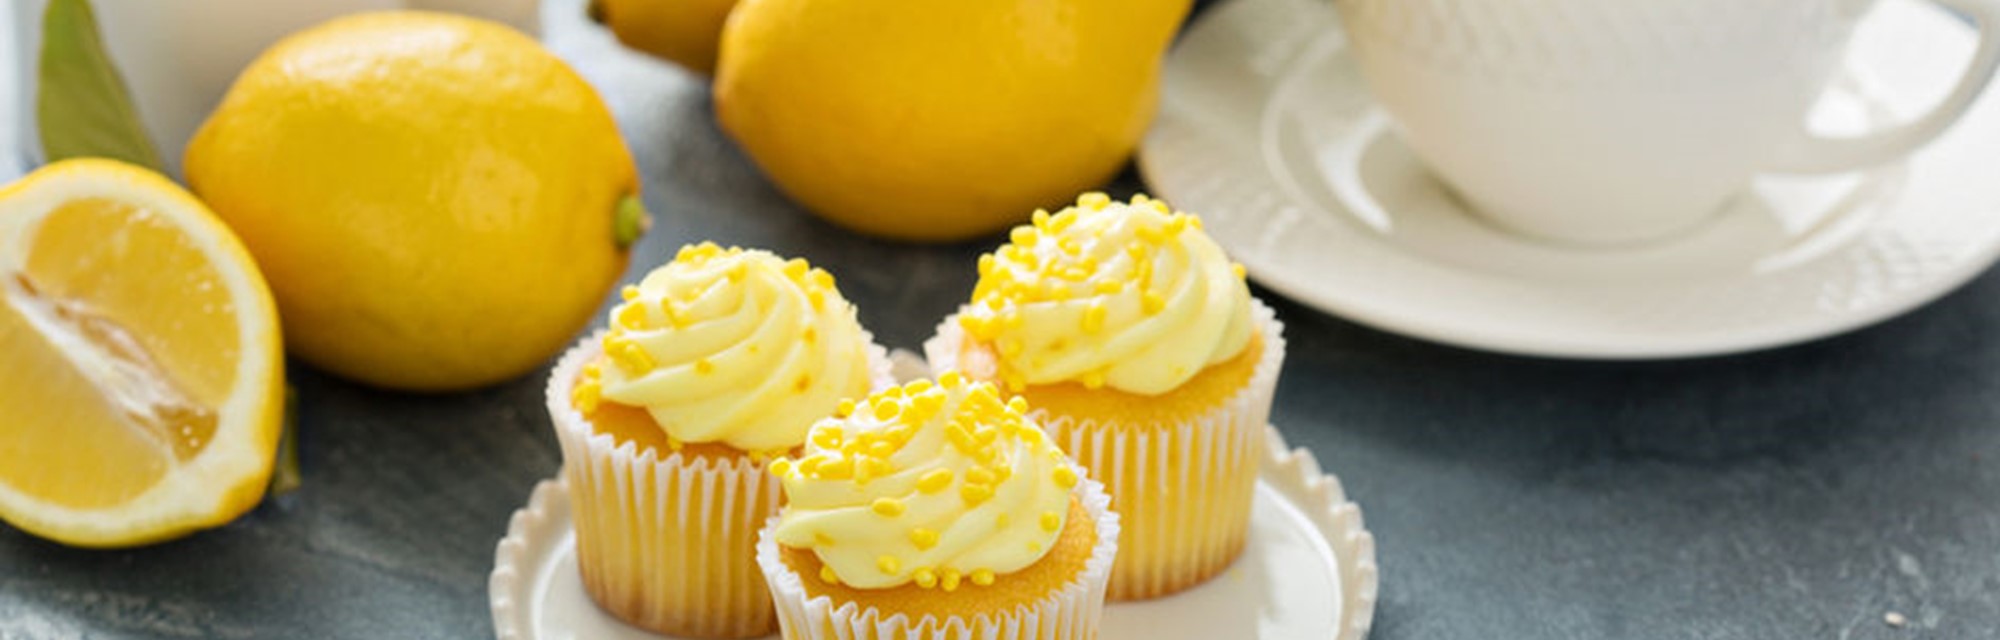 Snow capped lemon fairy cakes